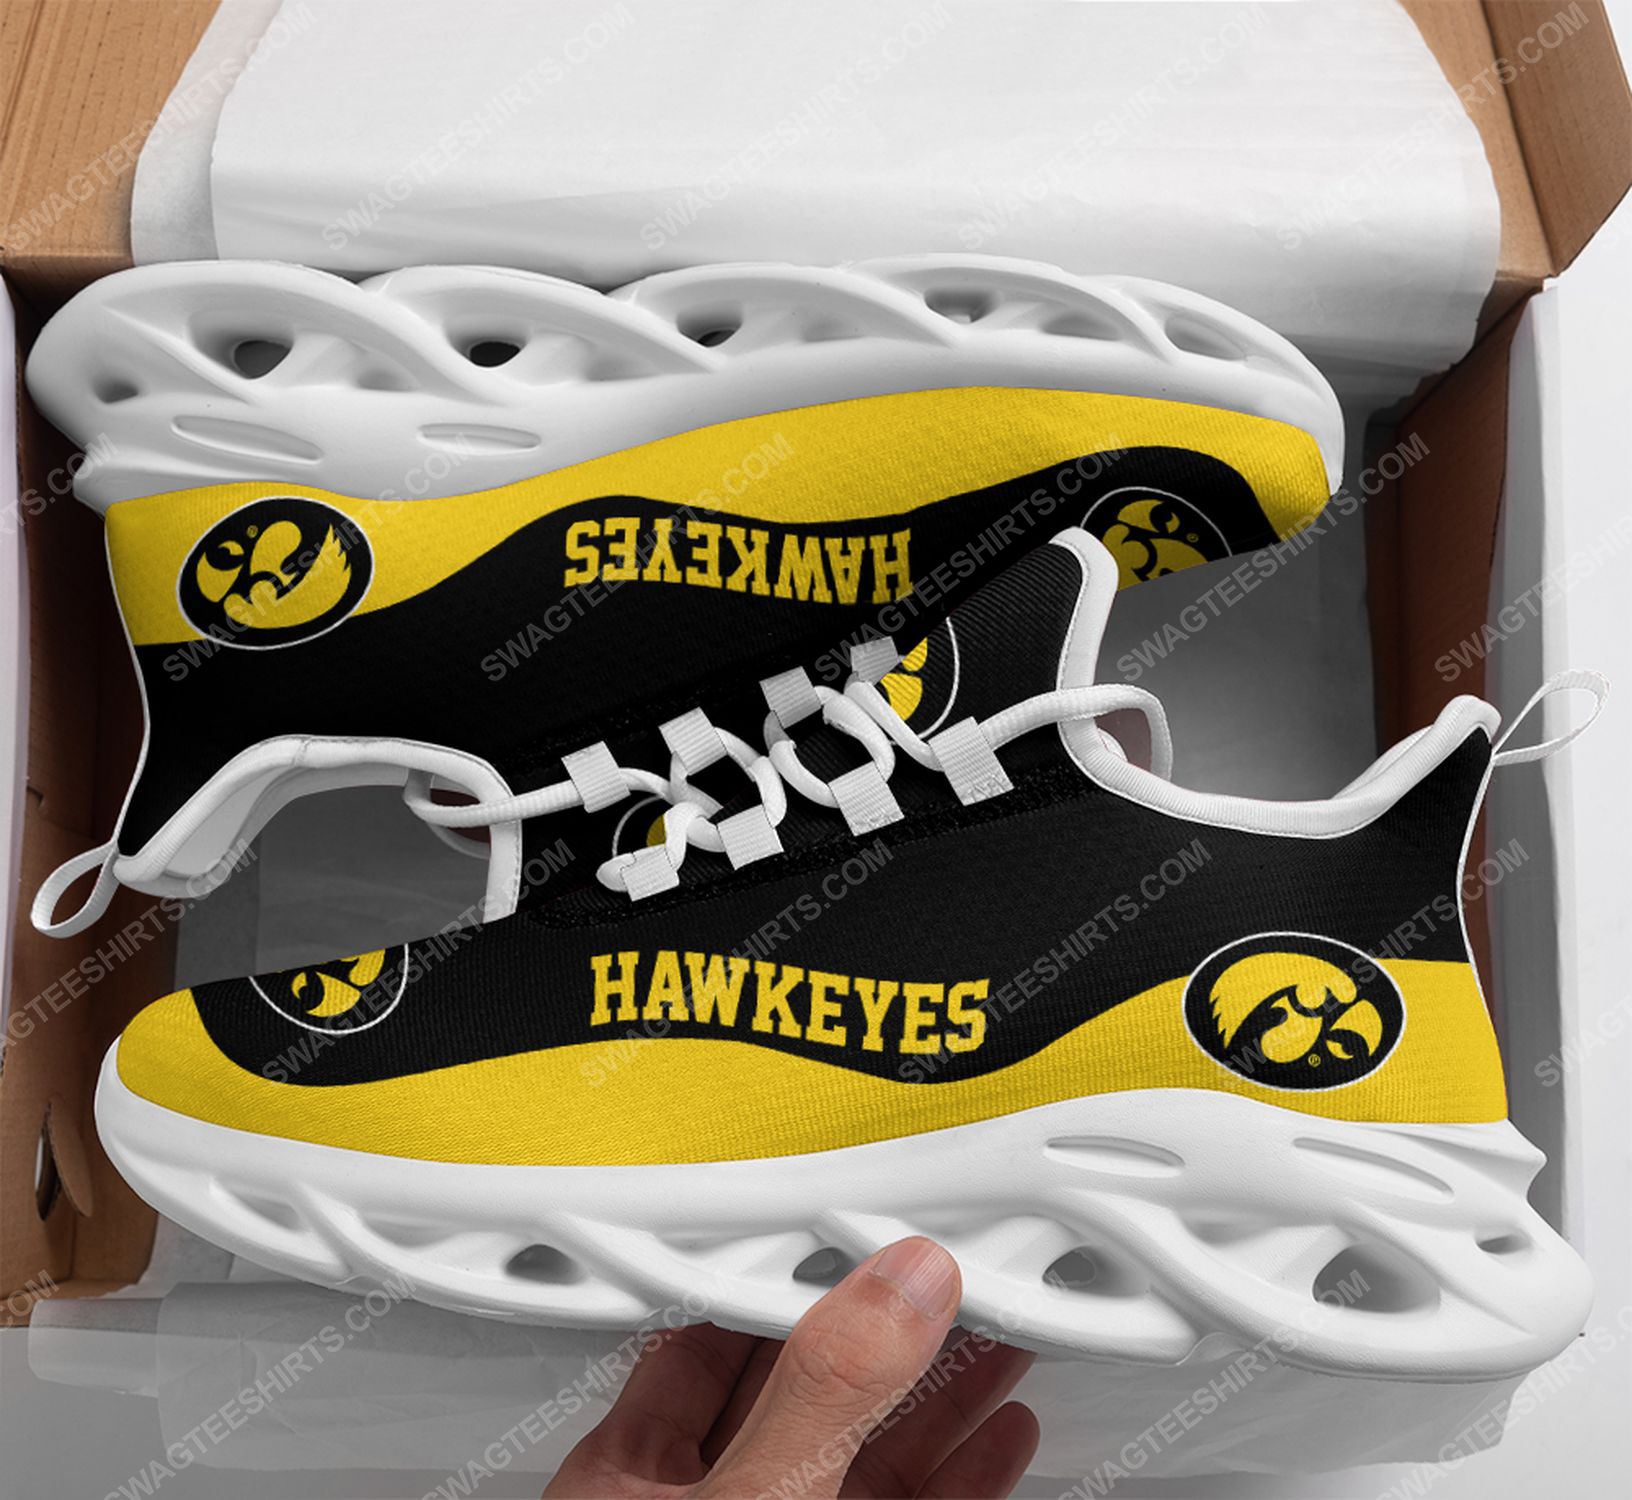 The iowa hawkeyes football team max soul shoes 1